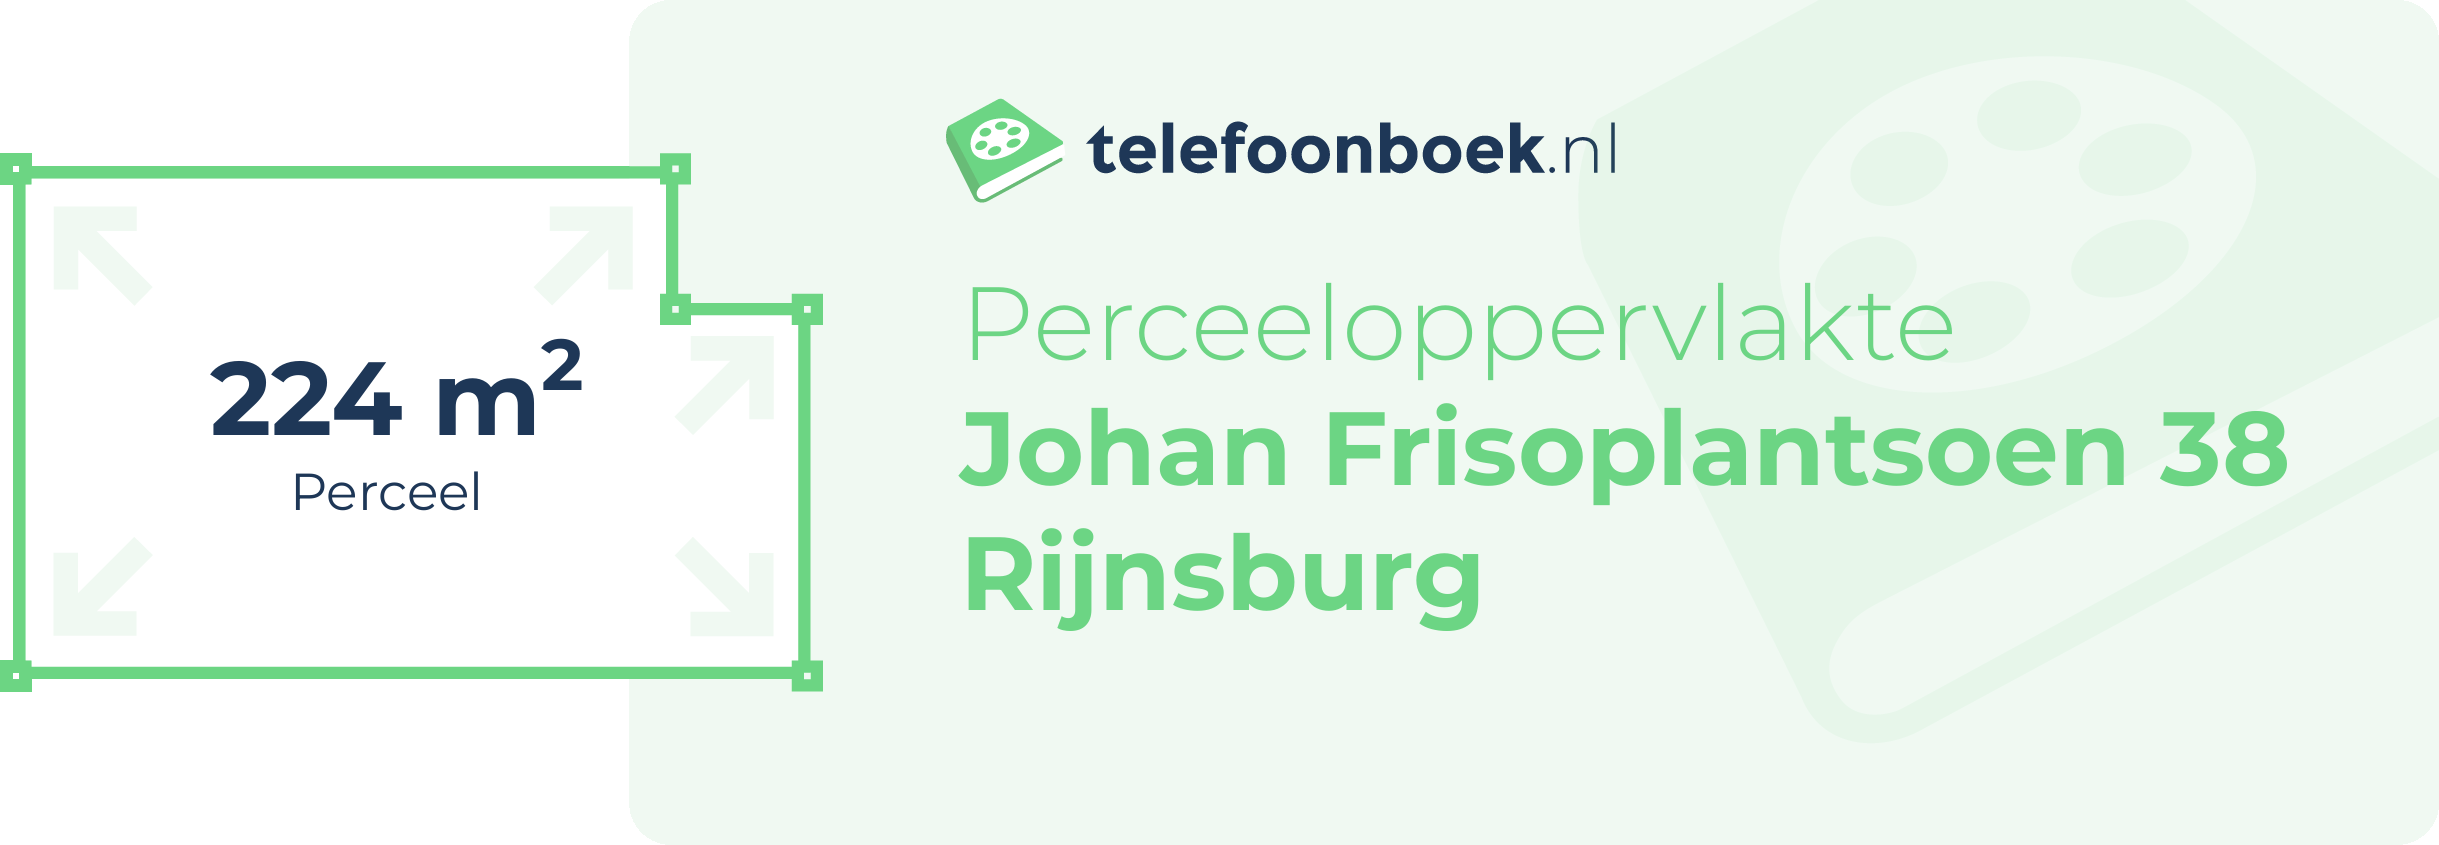 Perceeloppervlakte Johan Frisoplantsoen 38 Rijnsburg